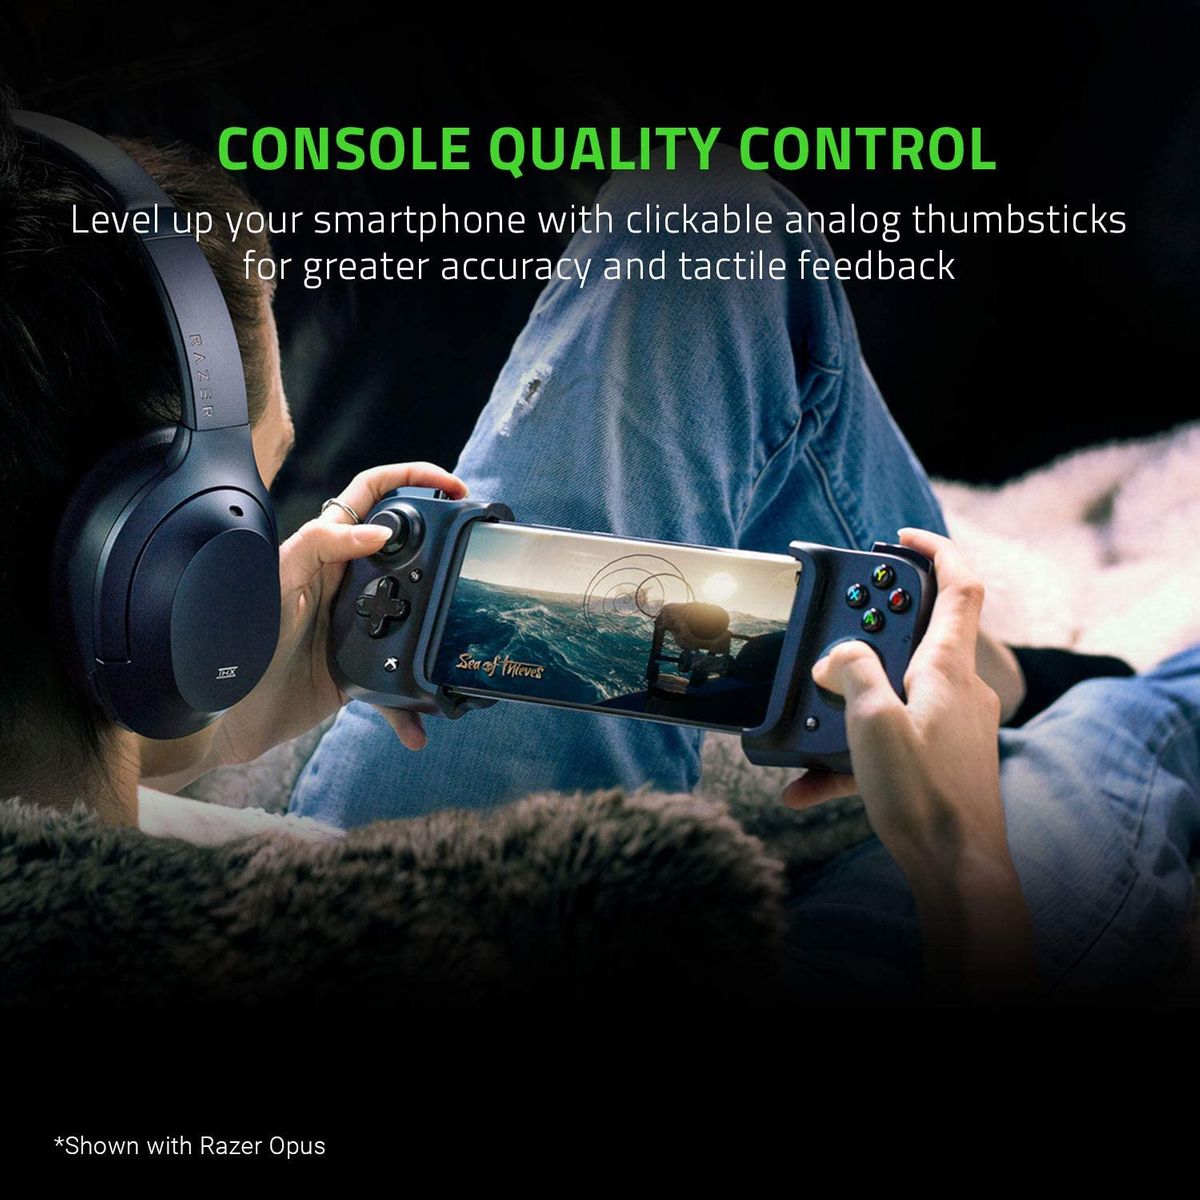 Razer Kishi for Android (Xbox) Mobile Gaming Controller Gamepad USB-C Black